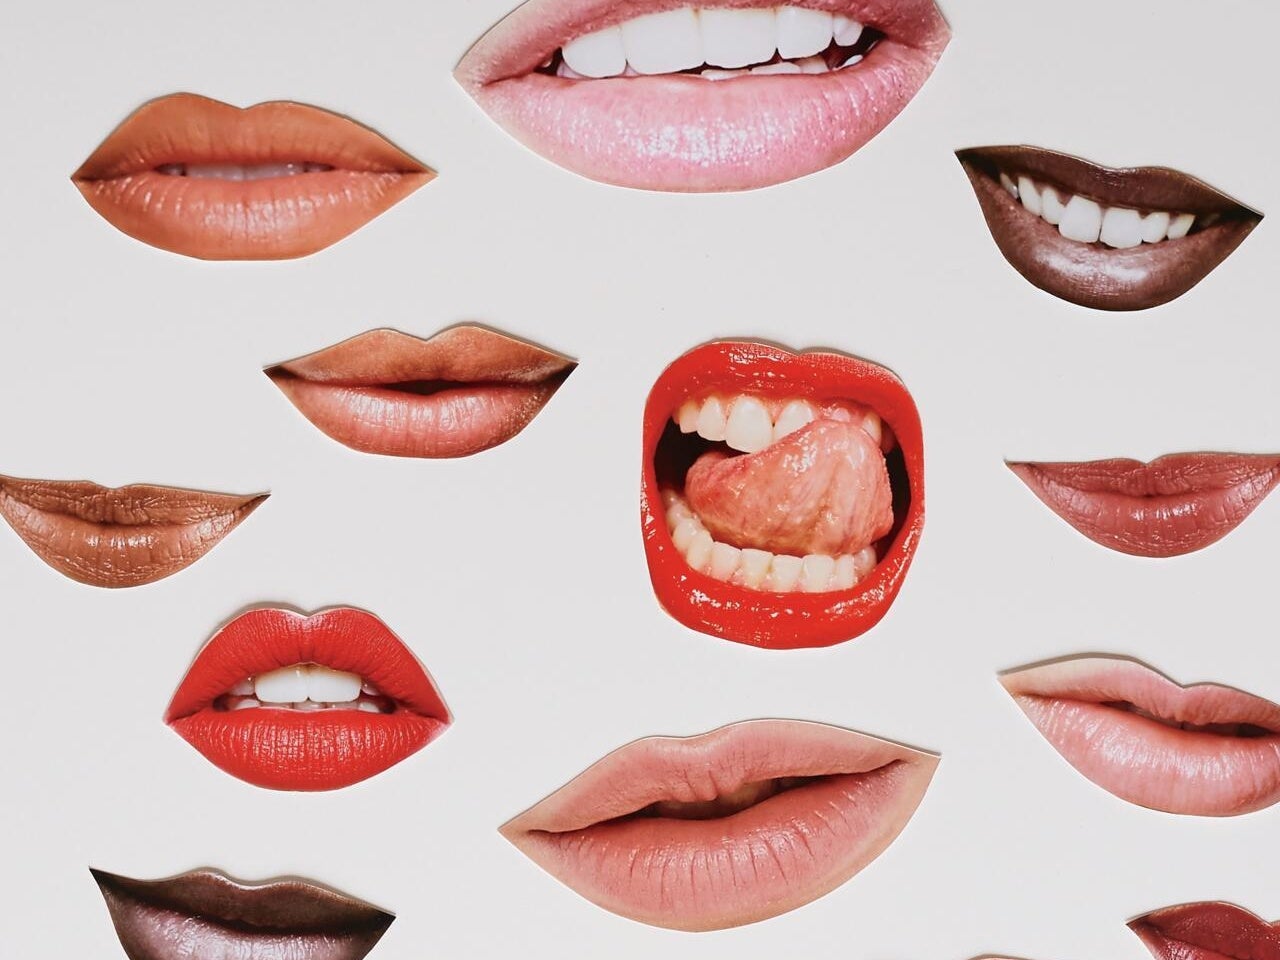 Lipstick Lovers: Prioritizing Your Personal Pleasure